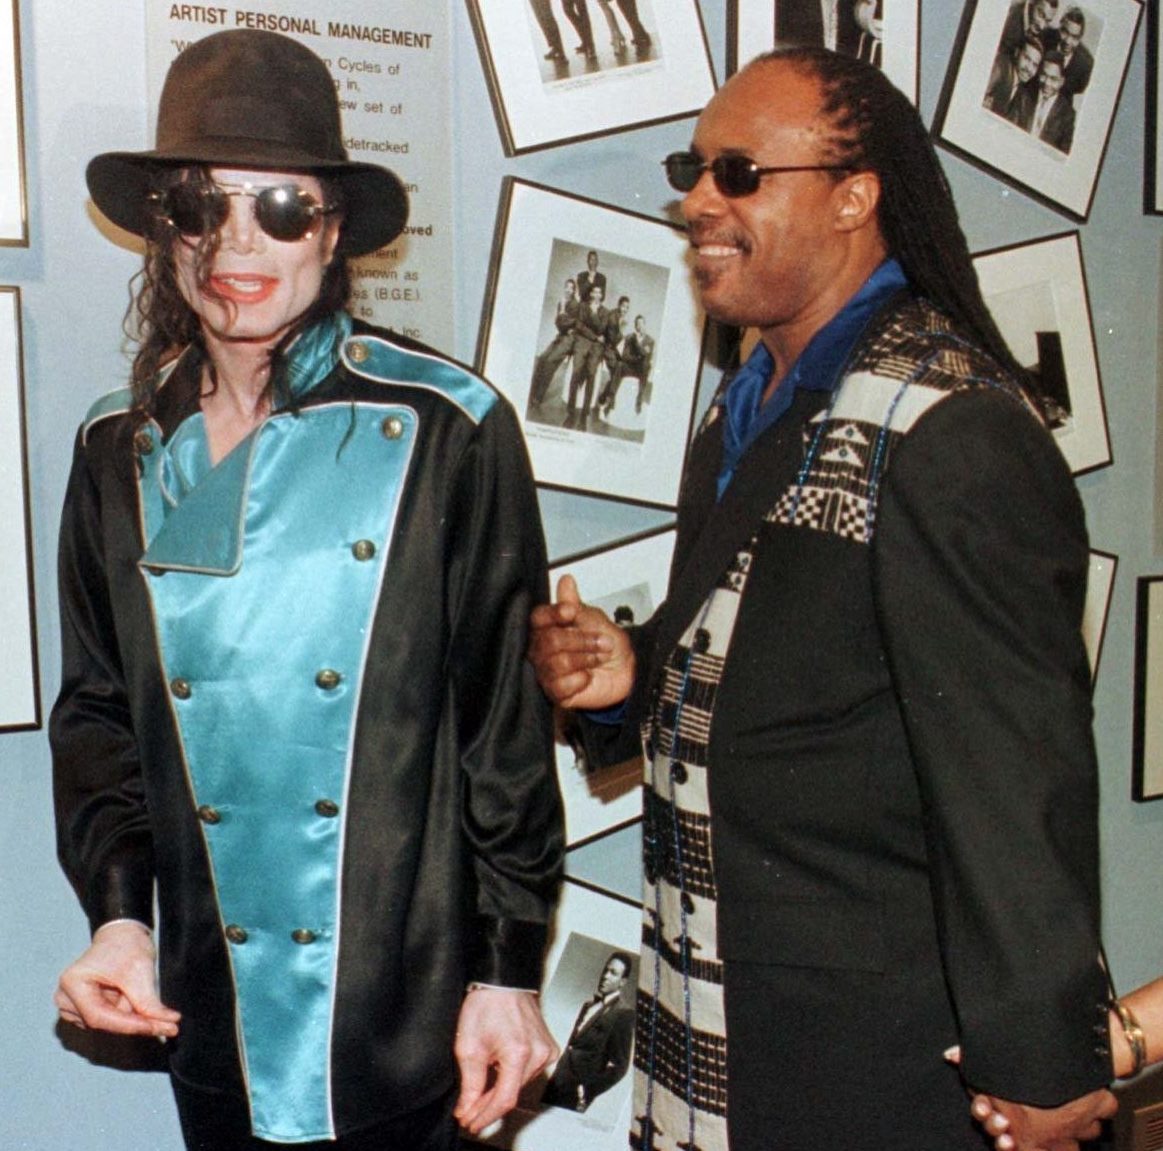 Stevie Wonder with Michael Jackson